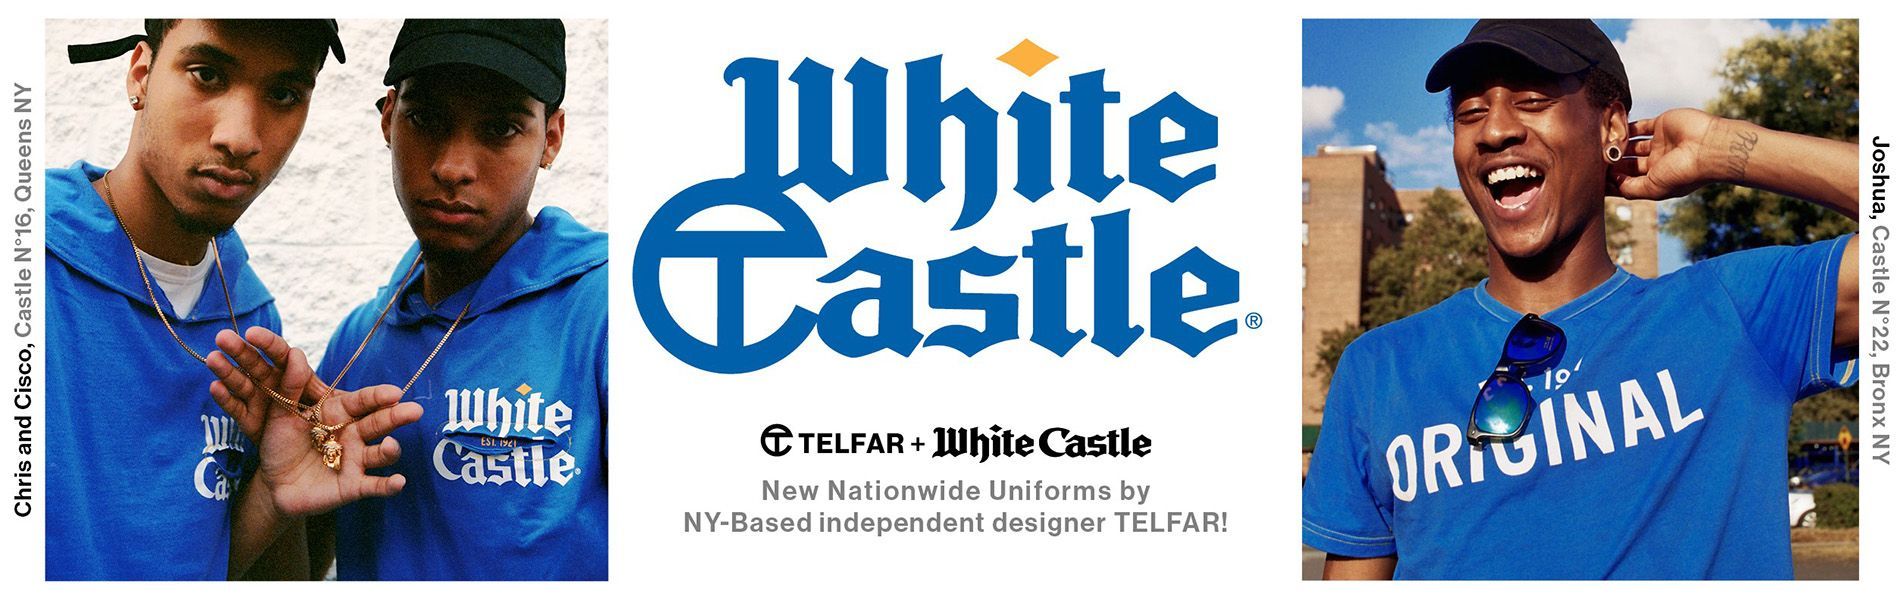 Uniformes White Castle x Telfar